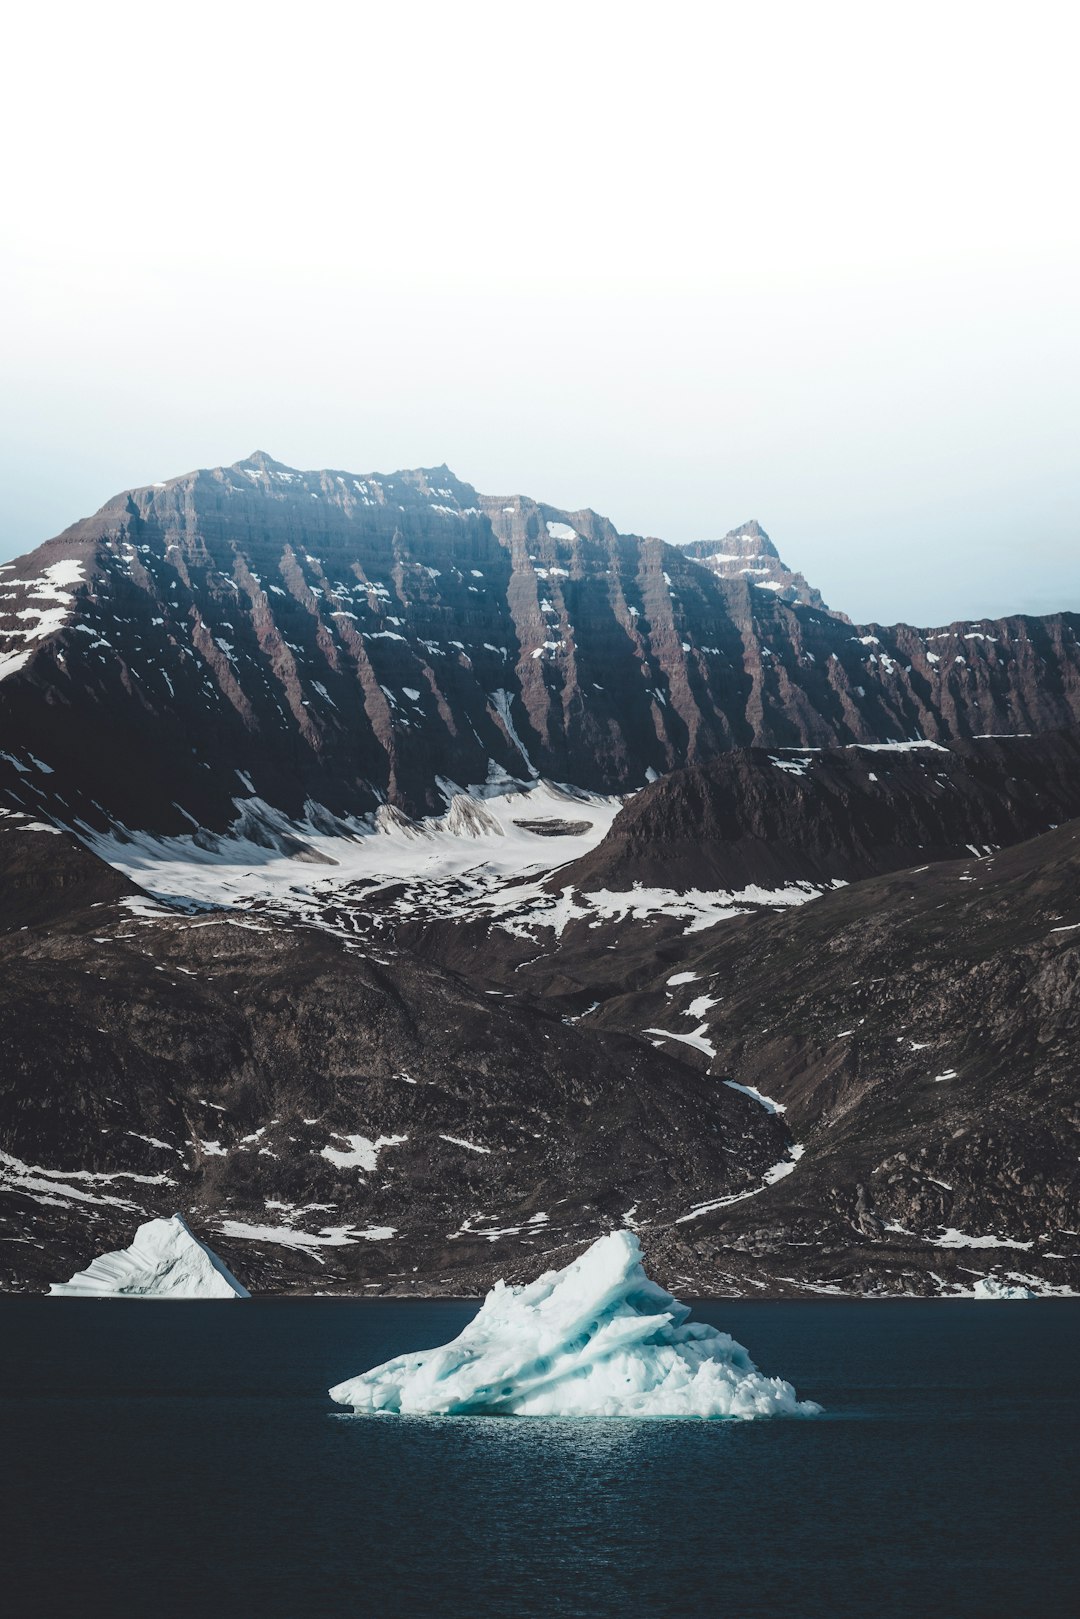 icebergs on sea near mountains during daytime